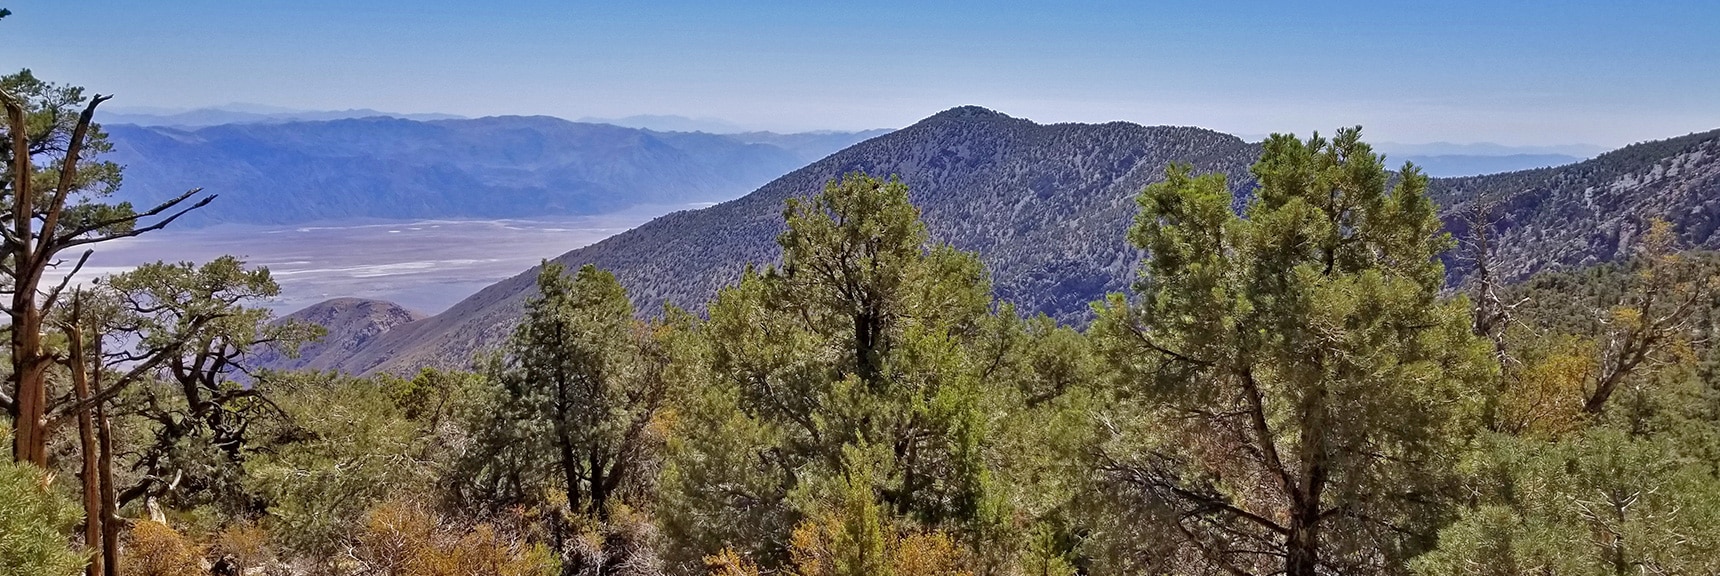 Hanaupah Canyon Lower and Mid Approach Ridge to Mahogany Flat Area | Wildrose Peak | Panamint Mountain Range | Death Valley National Park, California